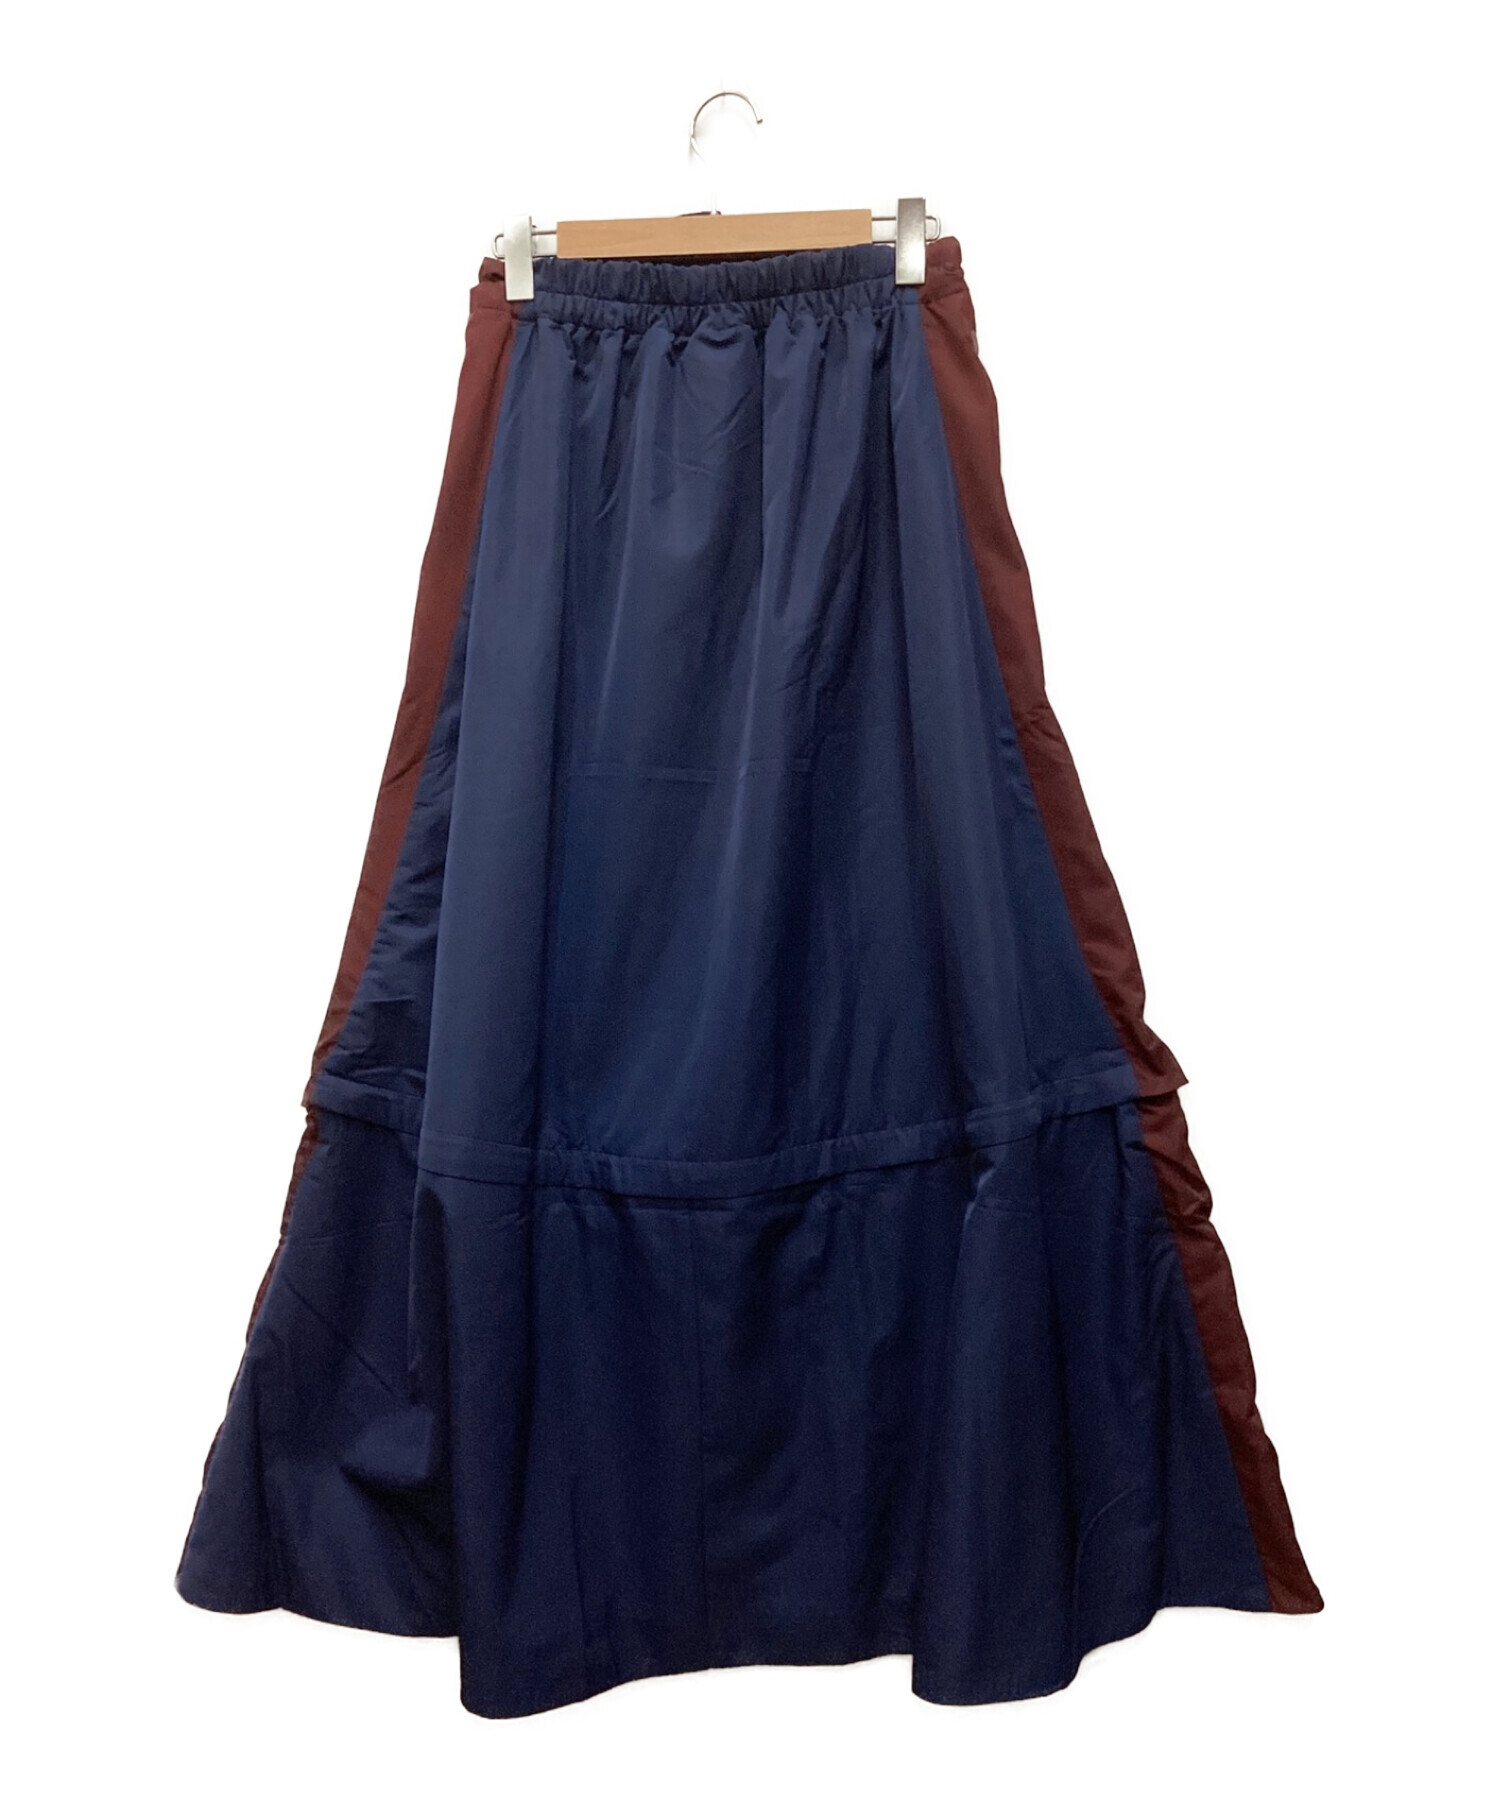 PUMA (プーマ) JUNE AMBROSE マキシロングスカート ネイビー サイズ:S